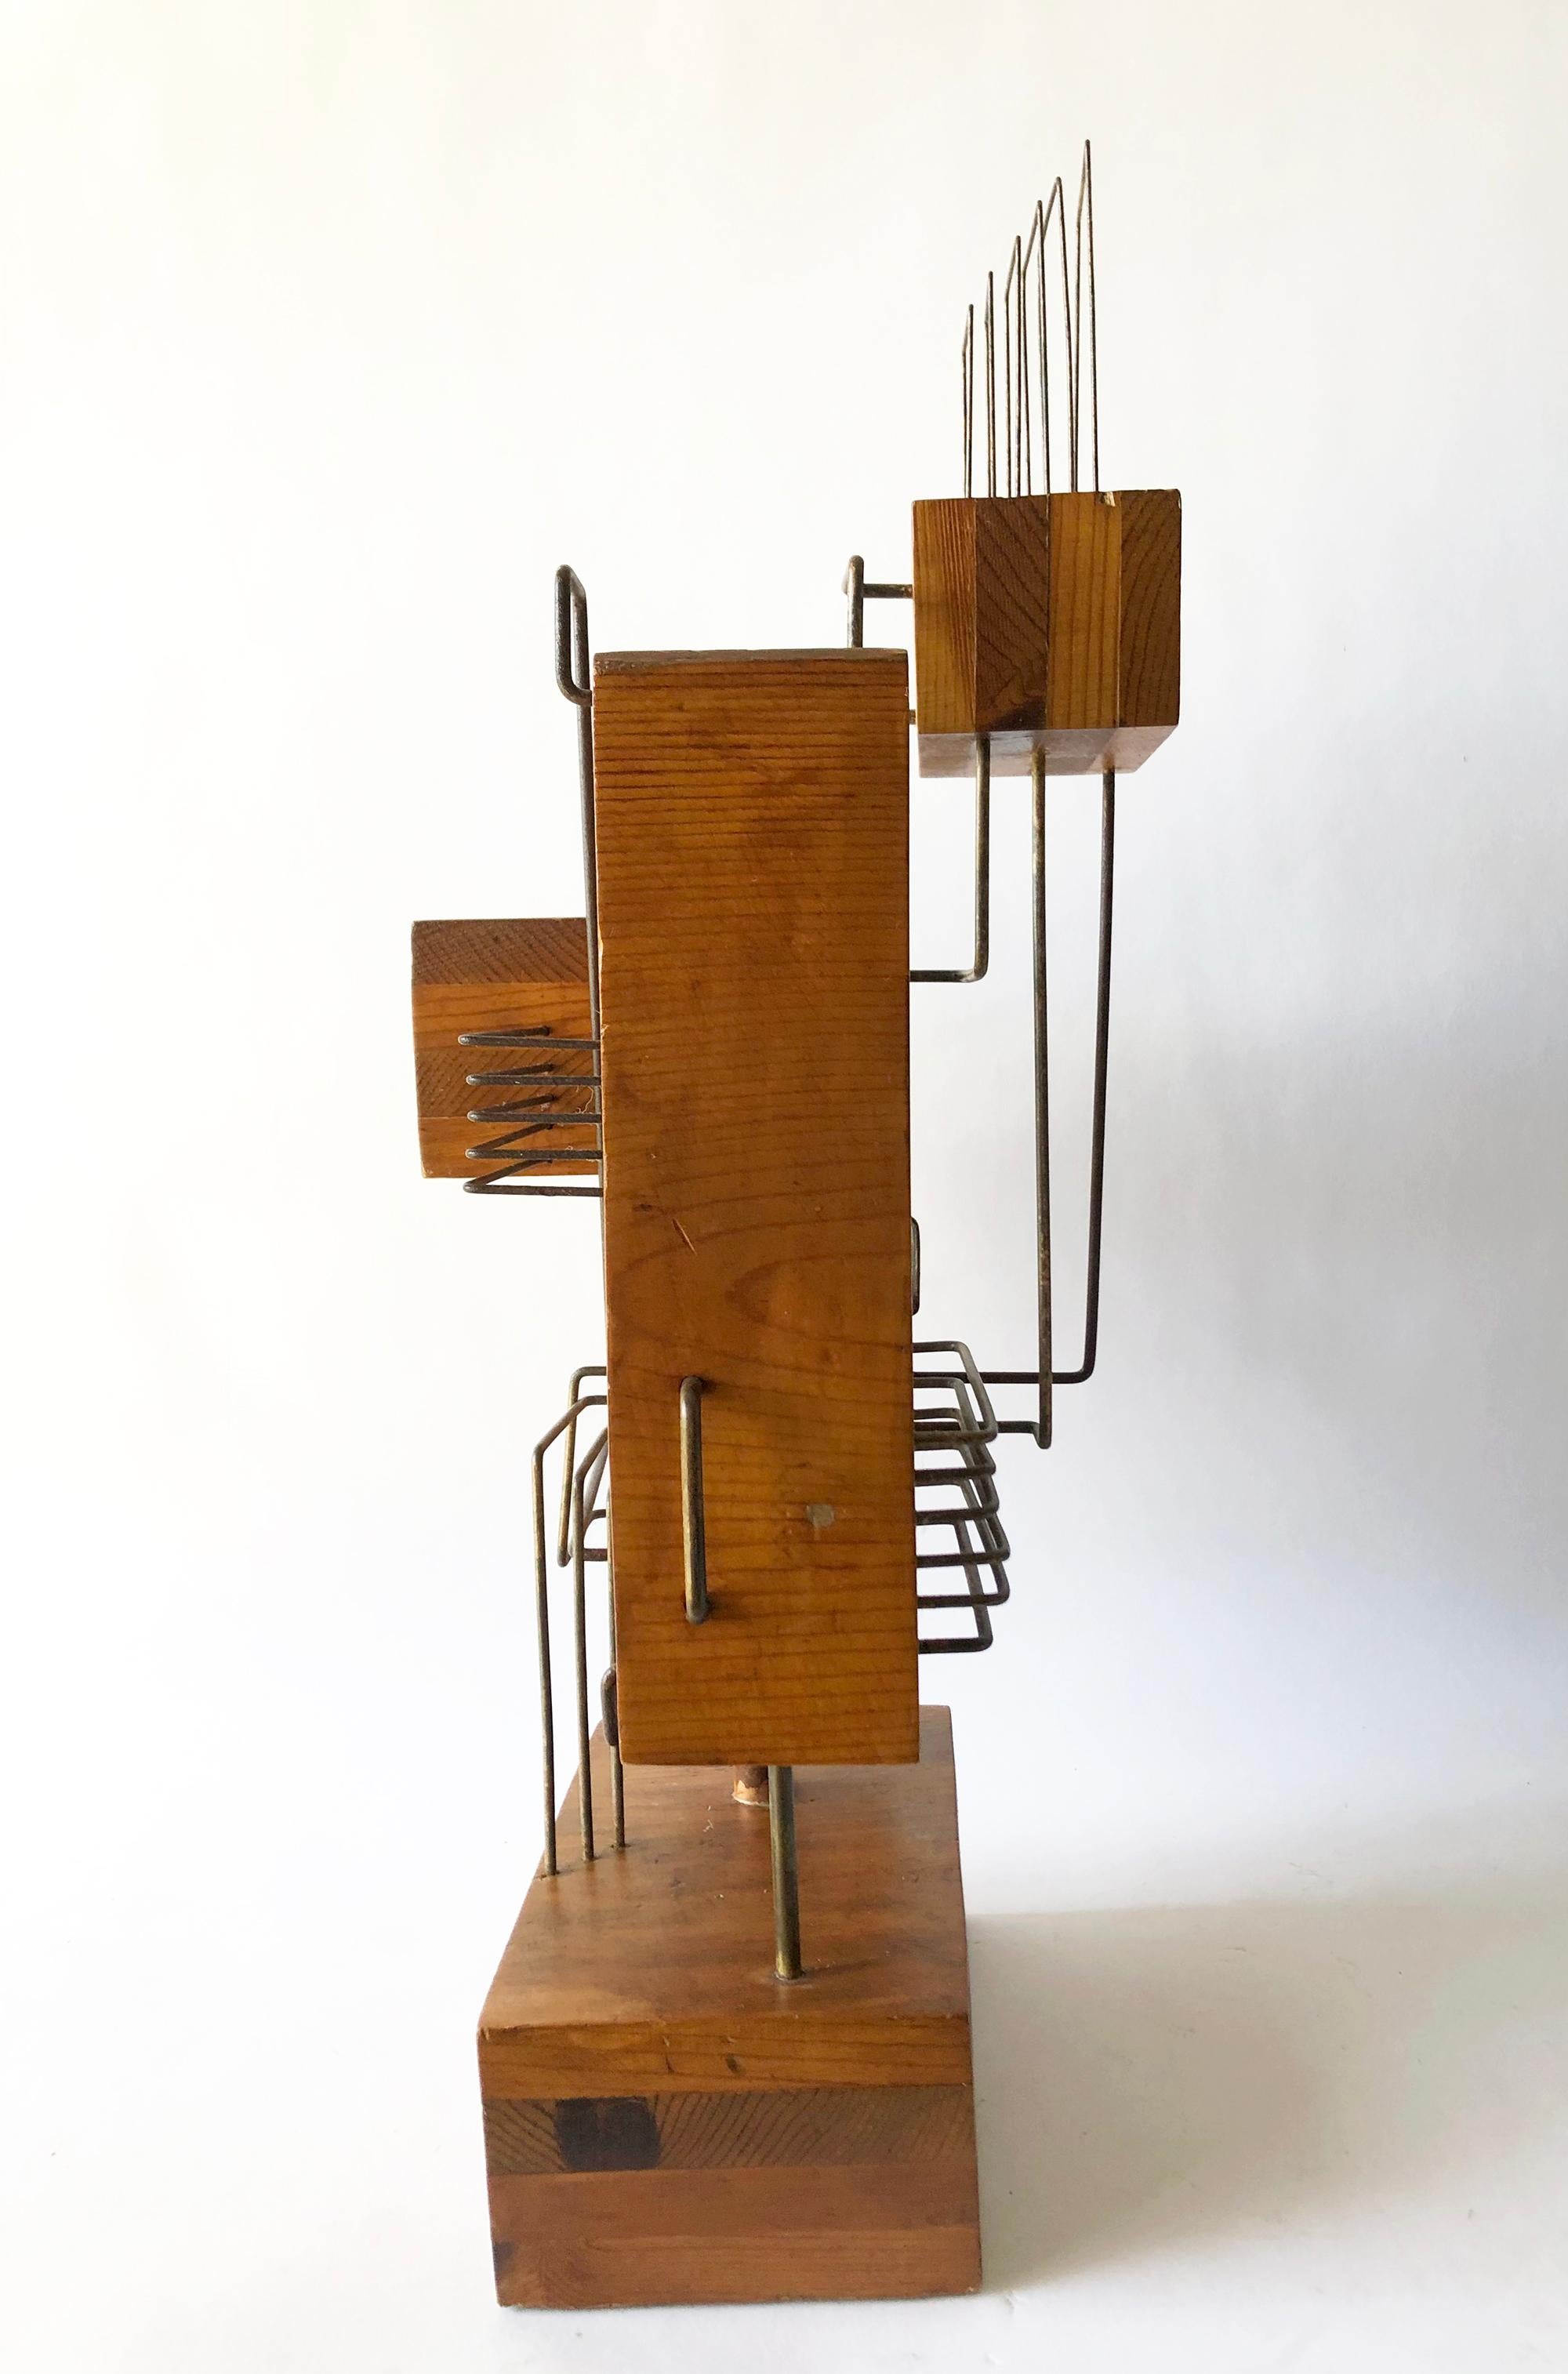 American Constructivist Laminated Wood Copper Wire Handmade Studio Sculpture